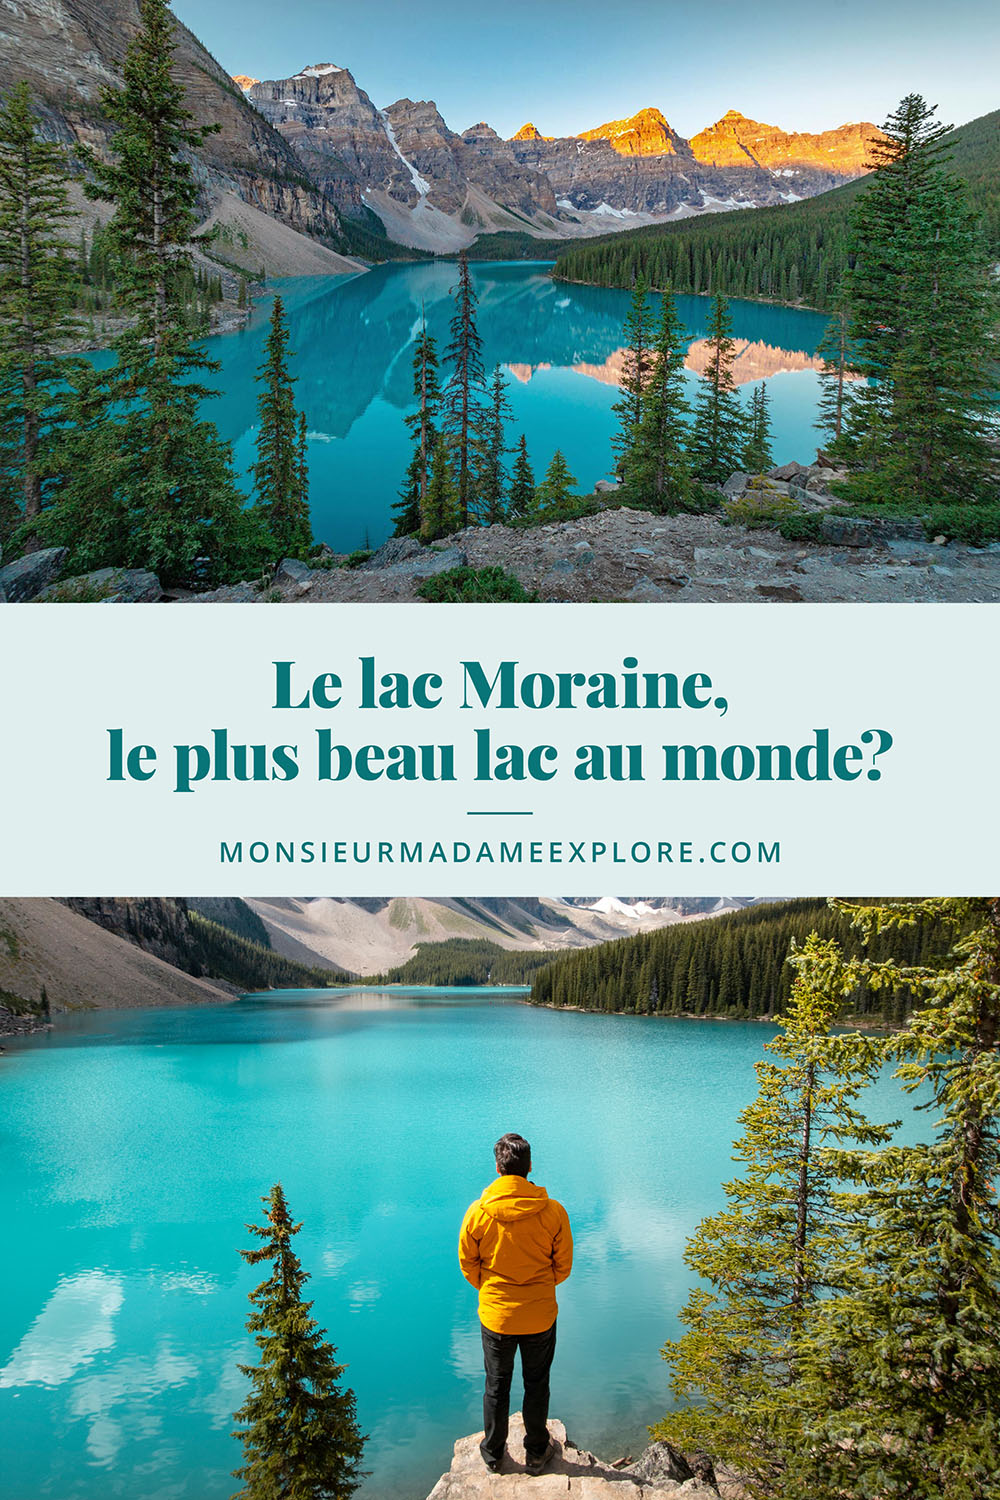 Le lac Moraine, le plus beau lac au monde?, Monsieur+Madame Explore, Blogue de voyage, Rocheuses canadiennes, Alberta, Canada / Moraine Lake, the most beautiful lake in the world?, Canadian Rockies, Alberta, Canada